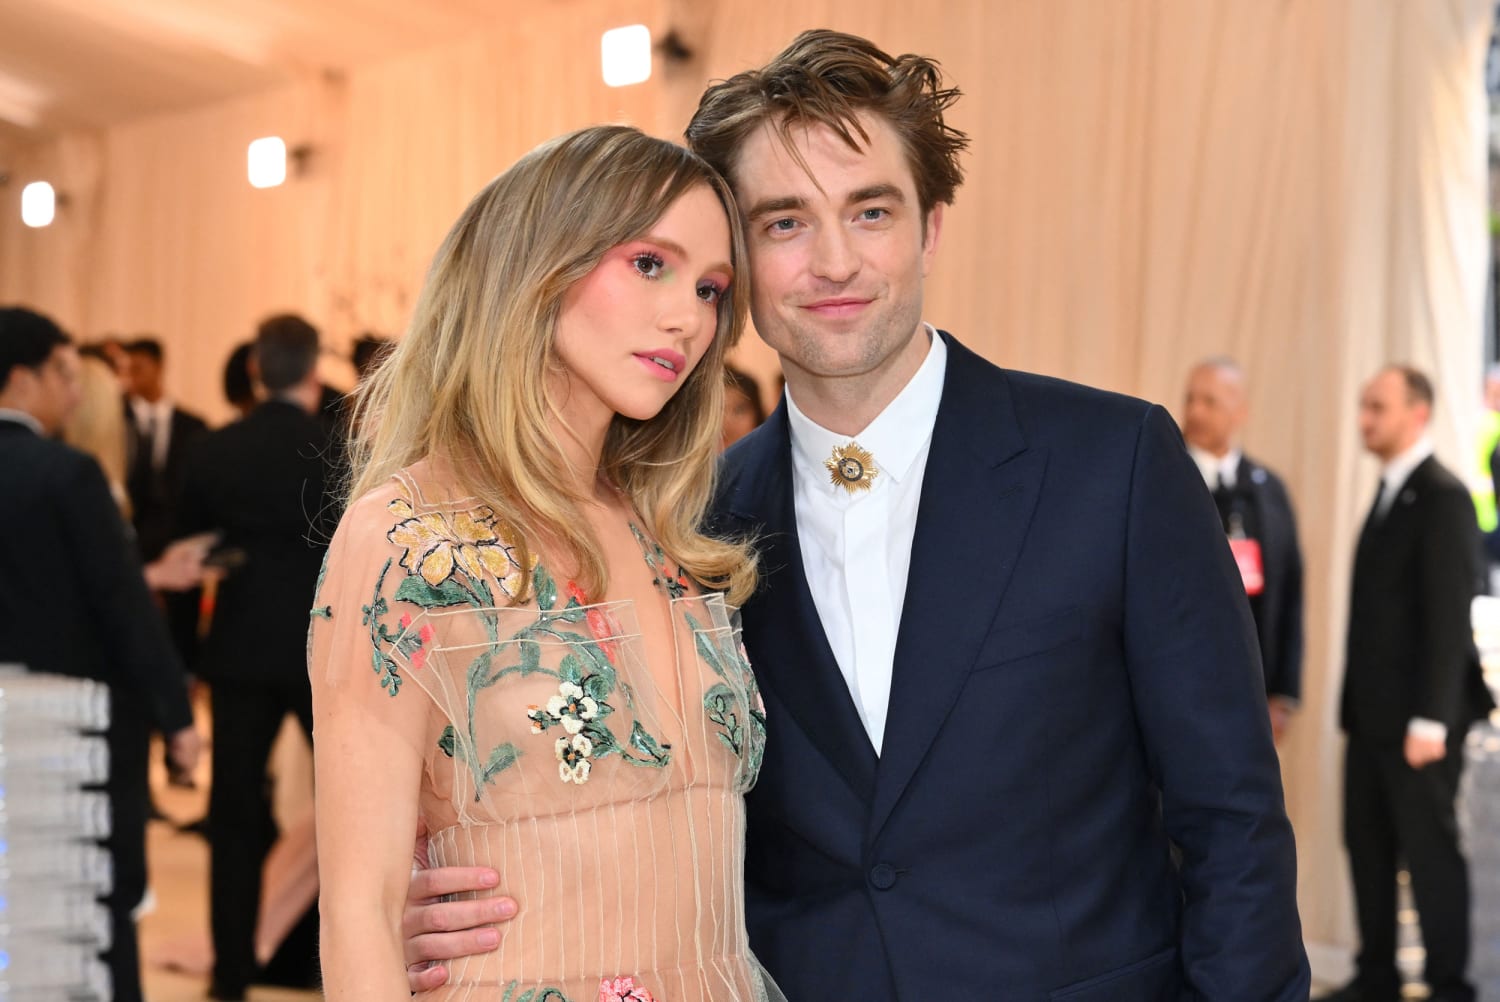 Suki Waterhouse, Robert Pattinson’s longtime girlfriend, reveals her pregnancy during the ceremony